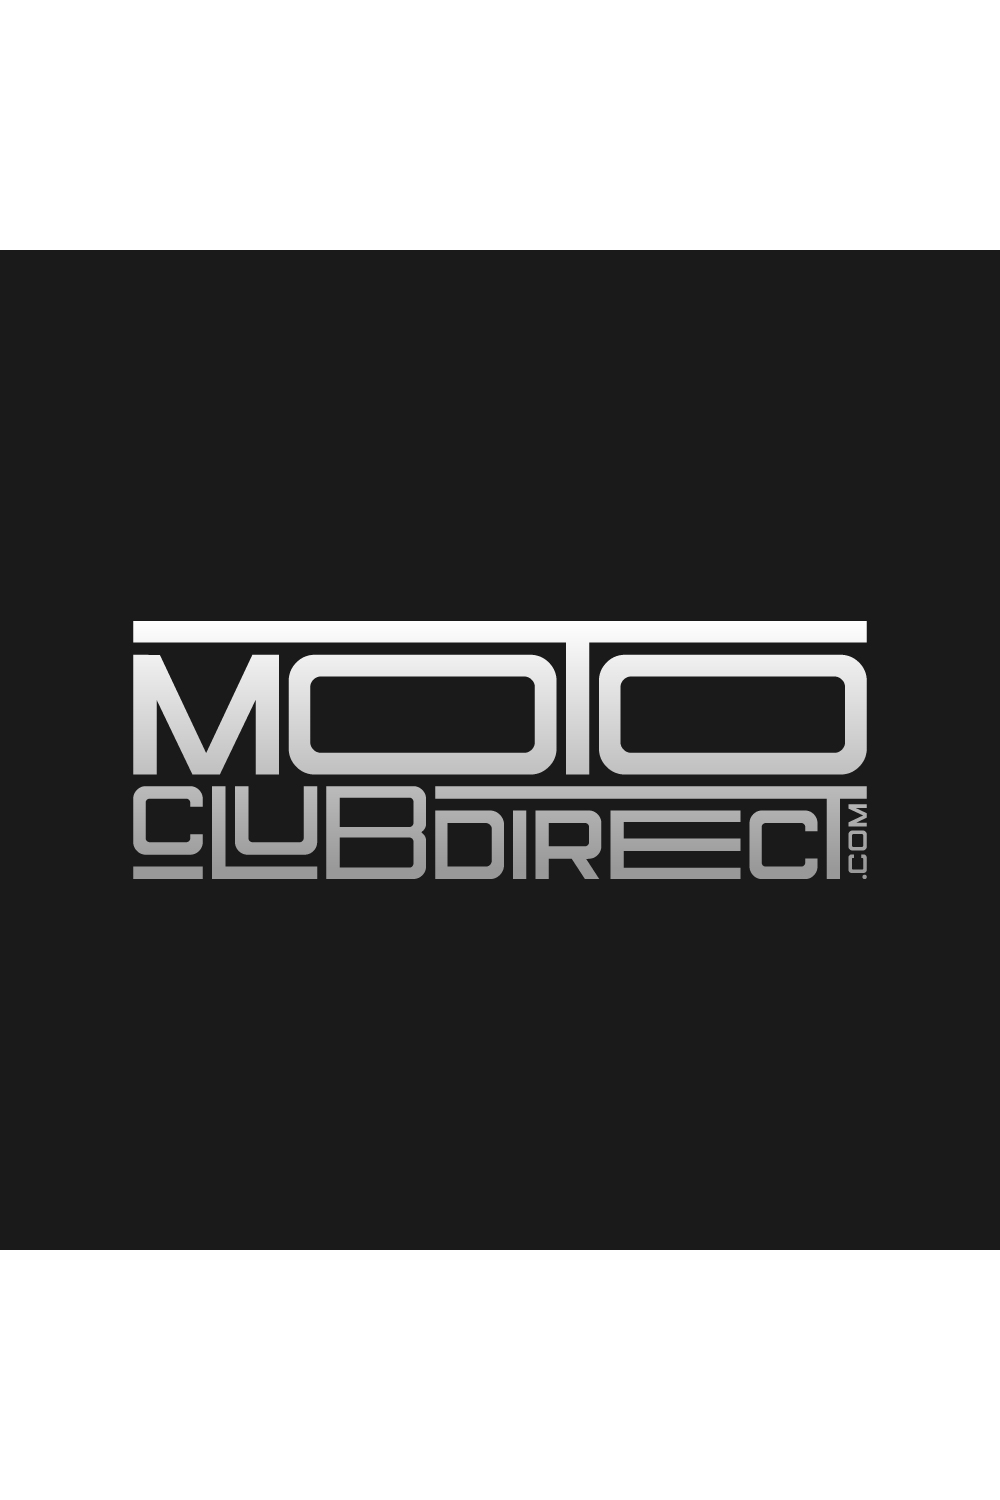 Moto club direct typography logo design pinterest preview image.